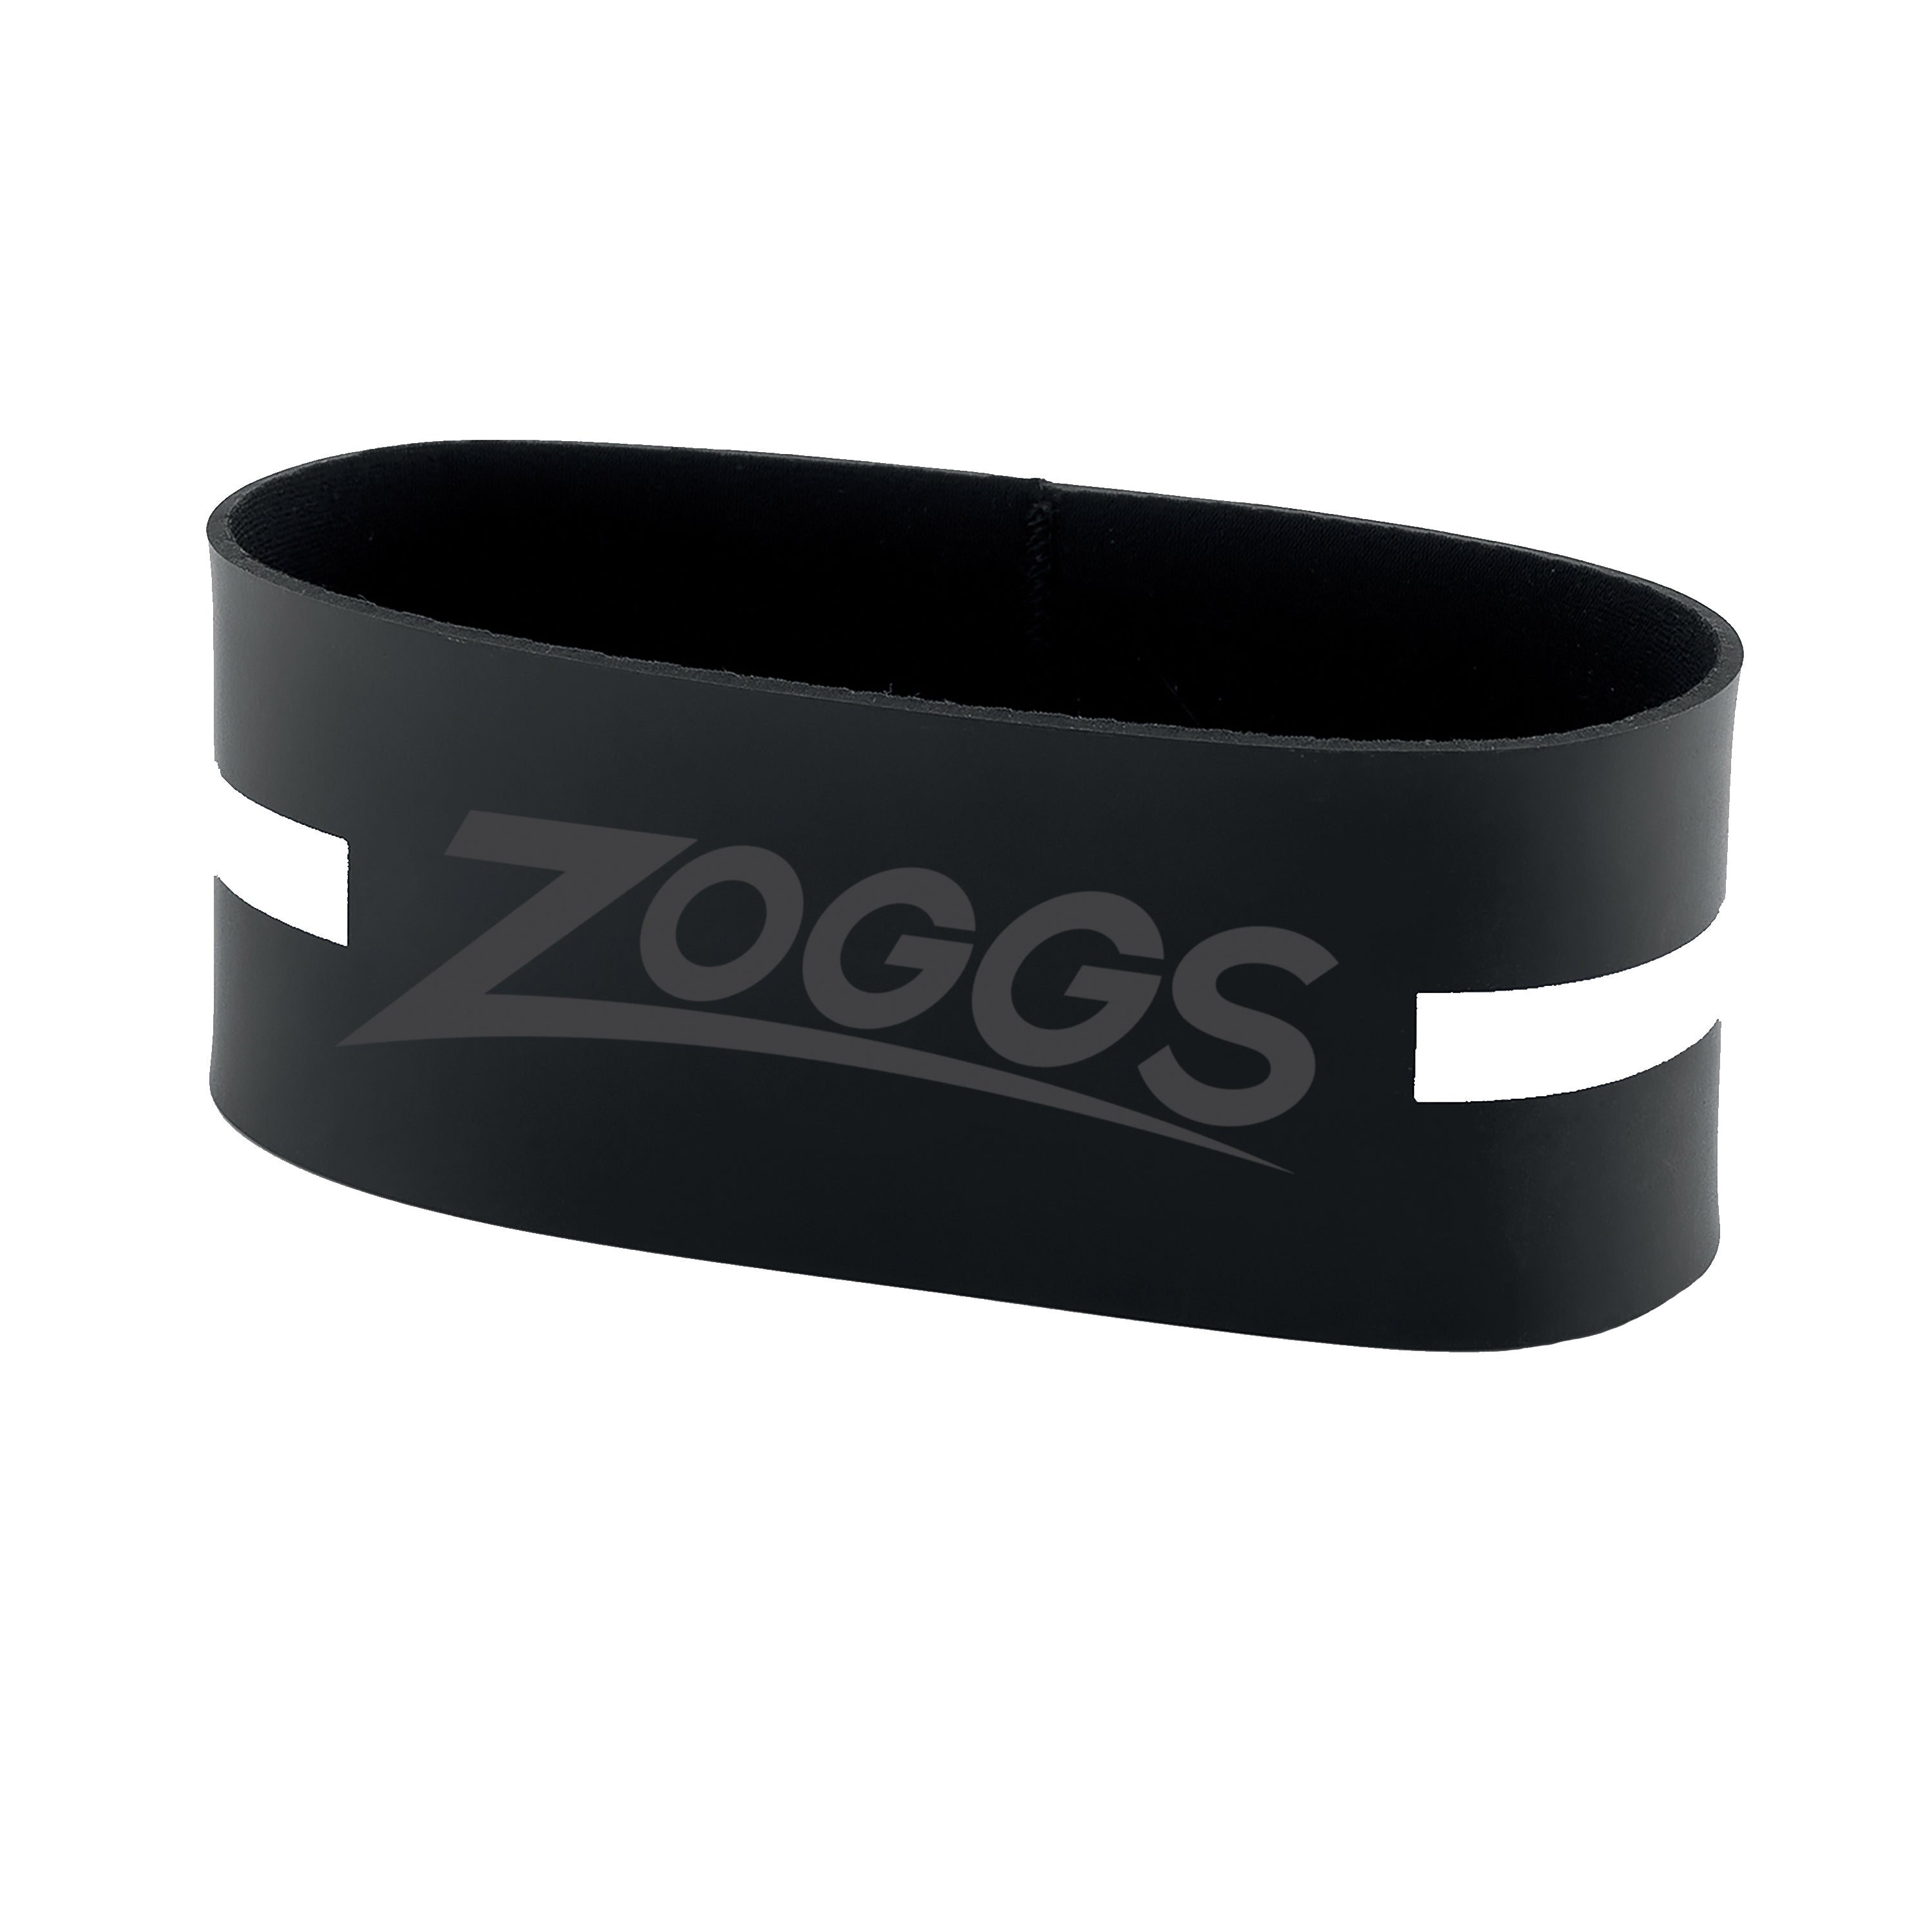 Zoggs Neo Stirnband, black/white